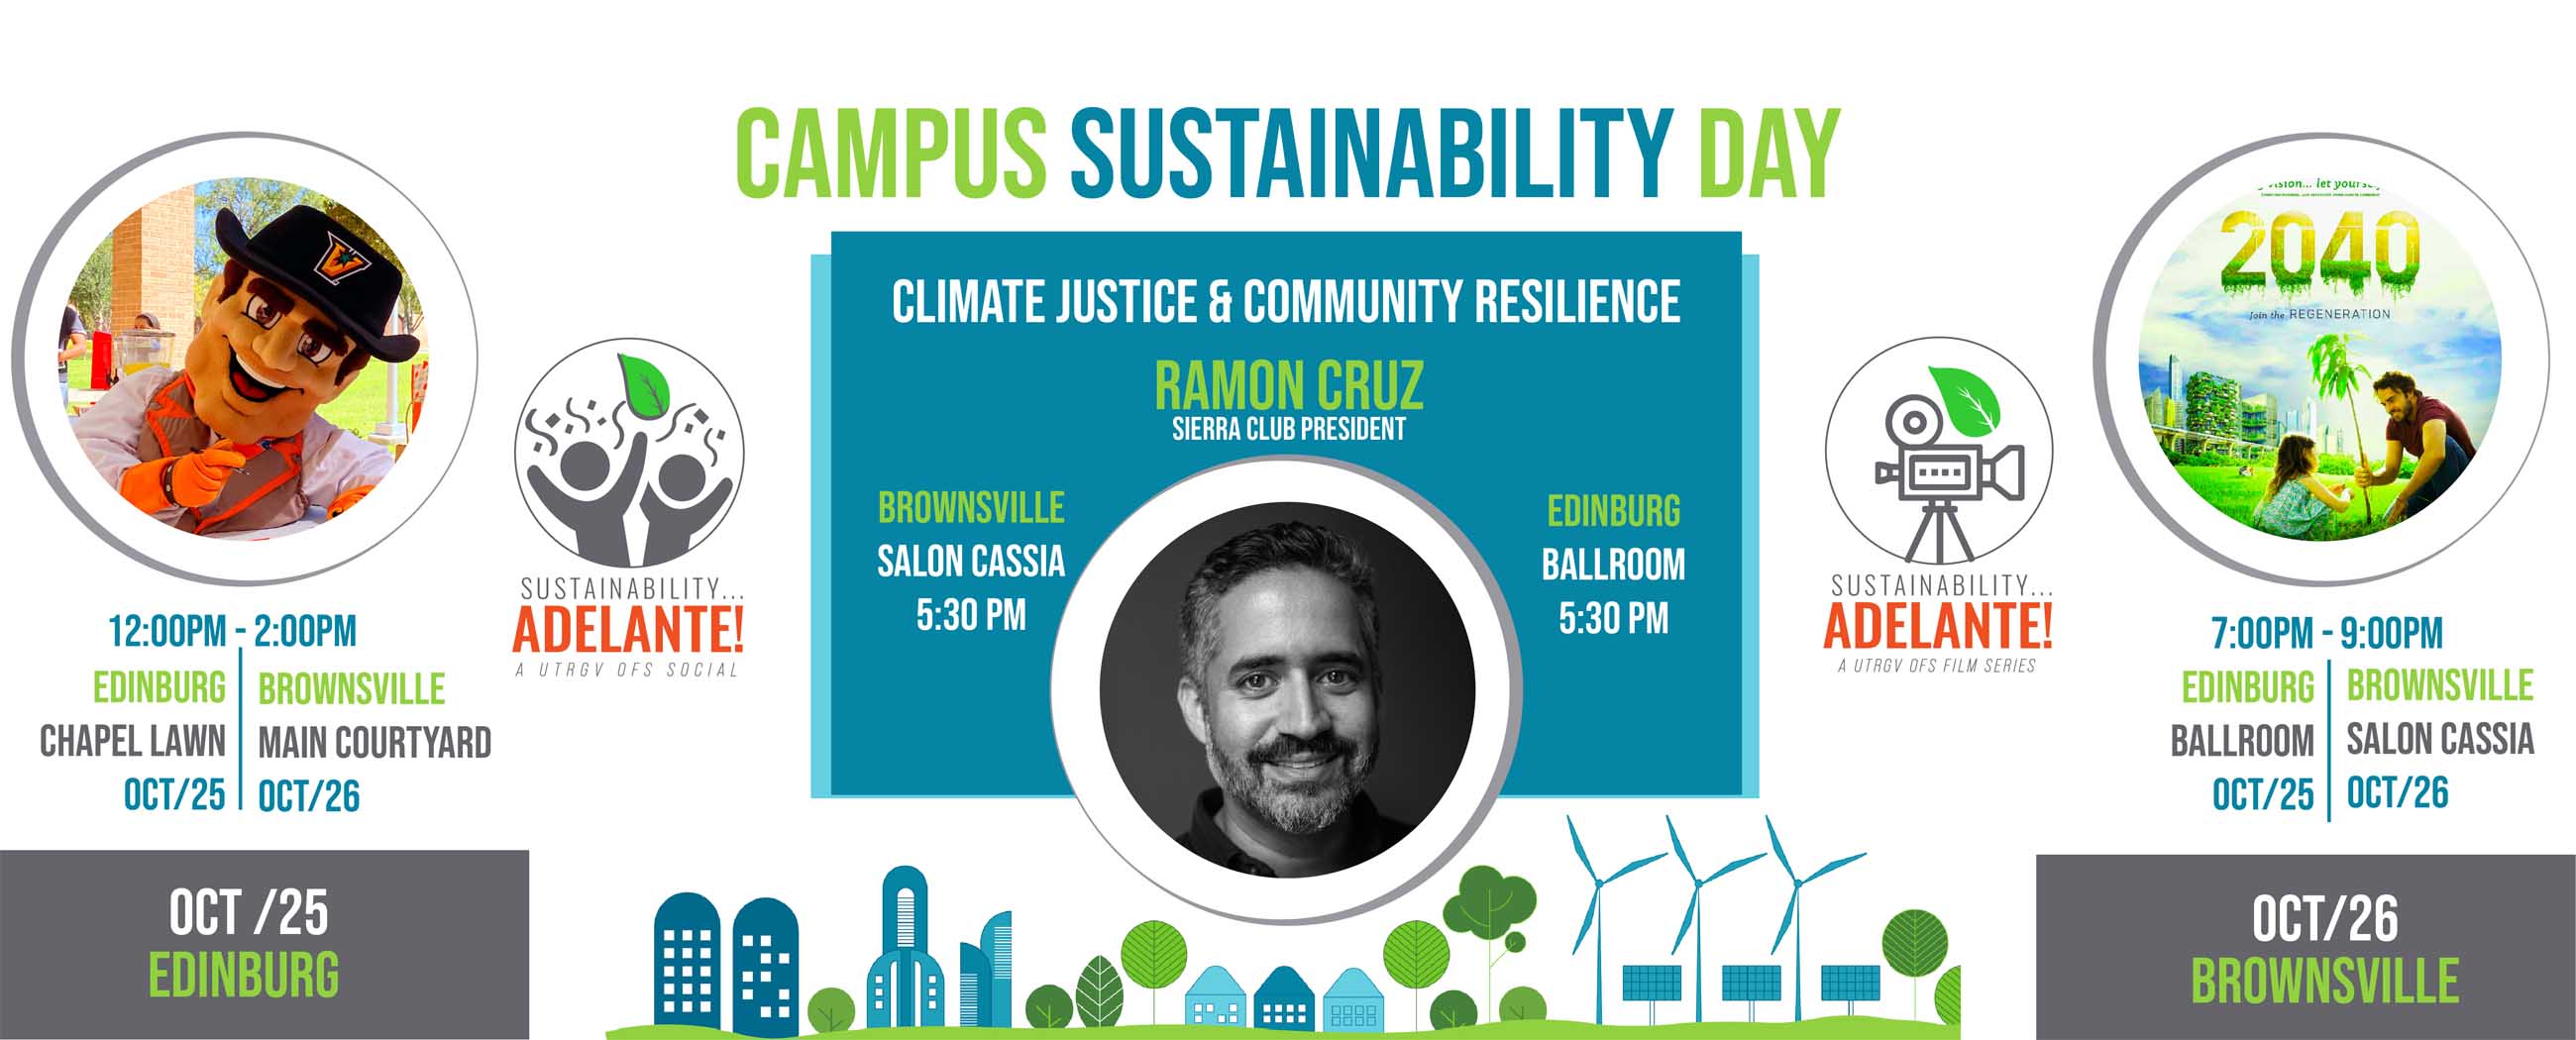 UTRGV Campus Sustainability Day Information